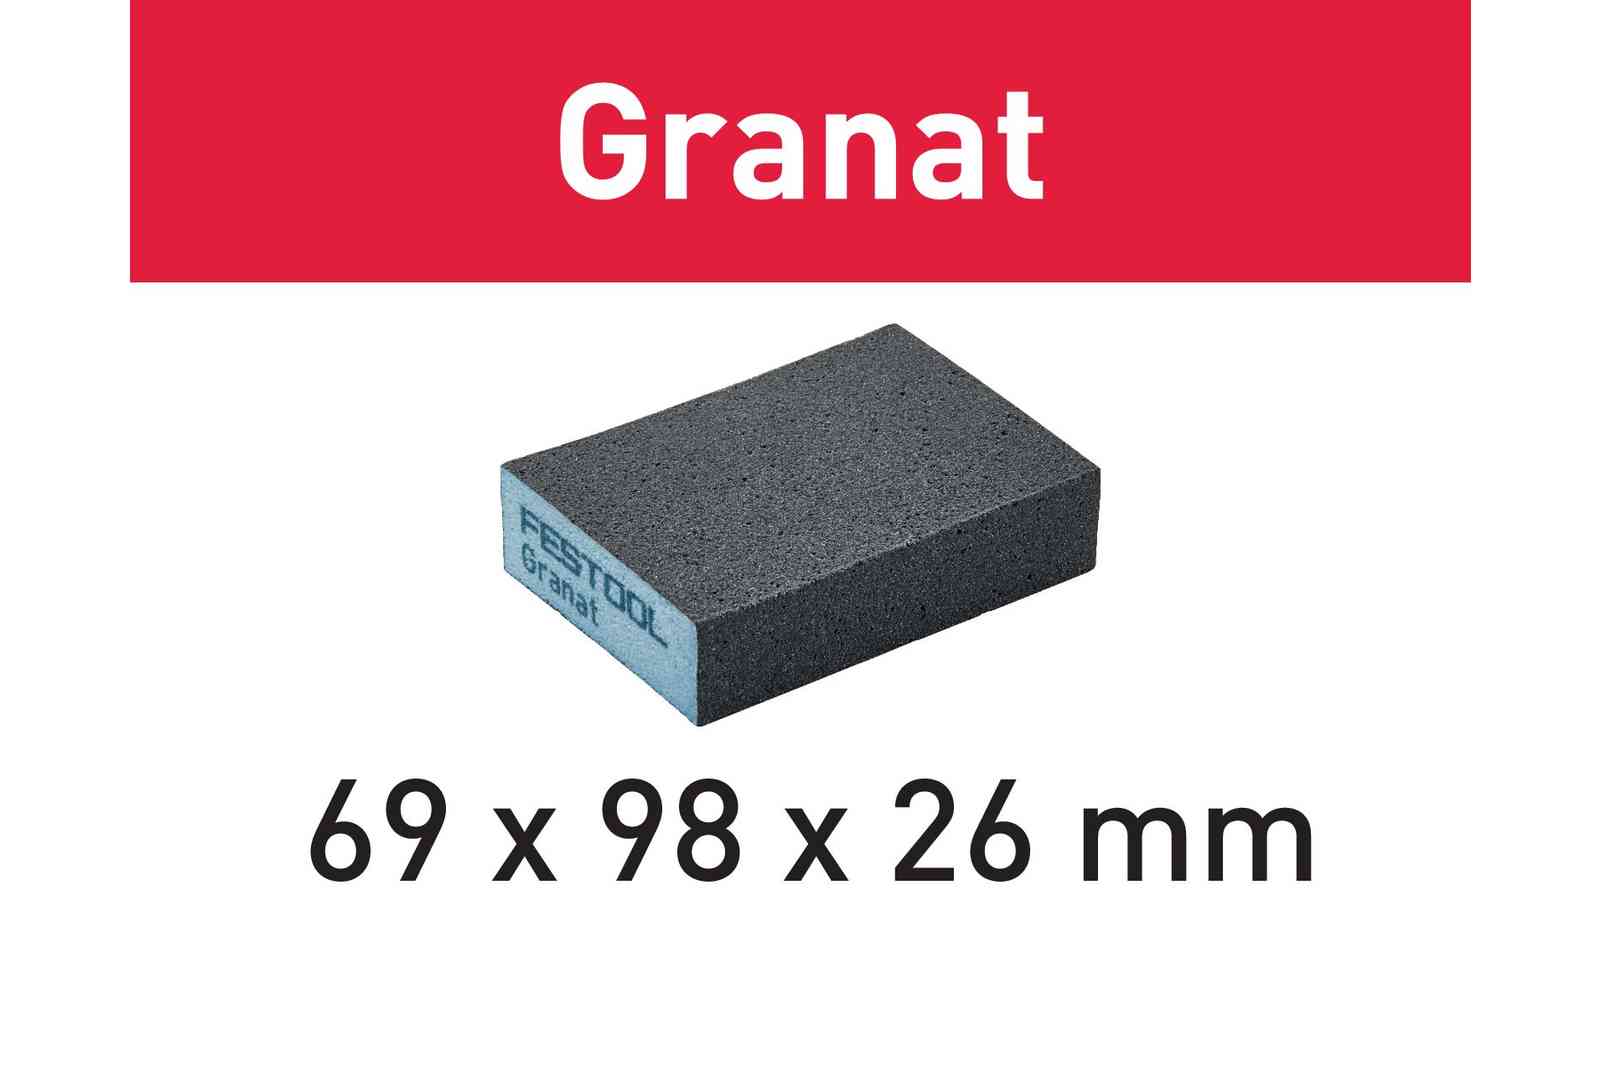 Festool Schleifblock Granat 69x98x26 60 GR/6 - 201081